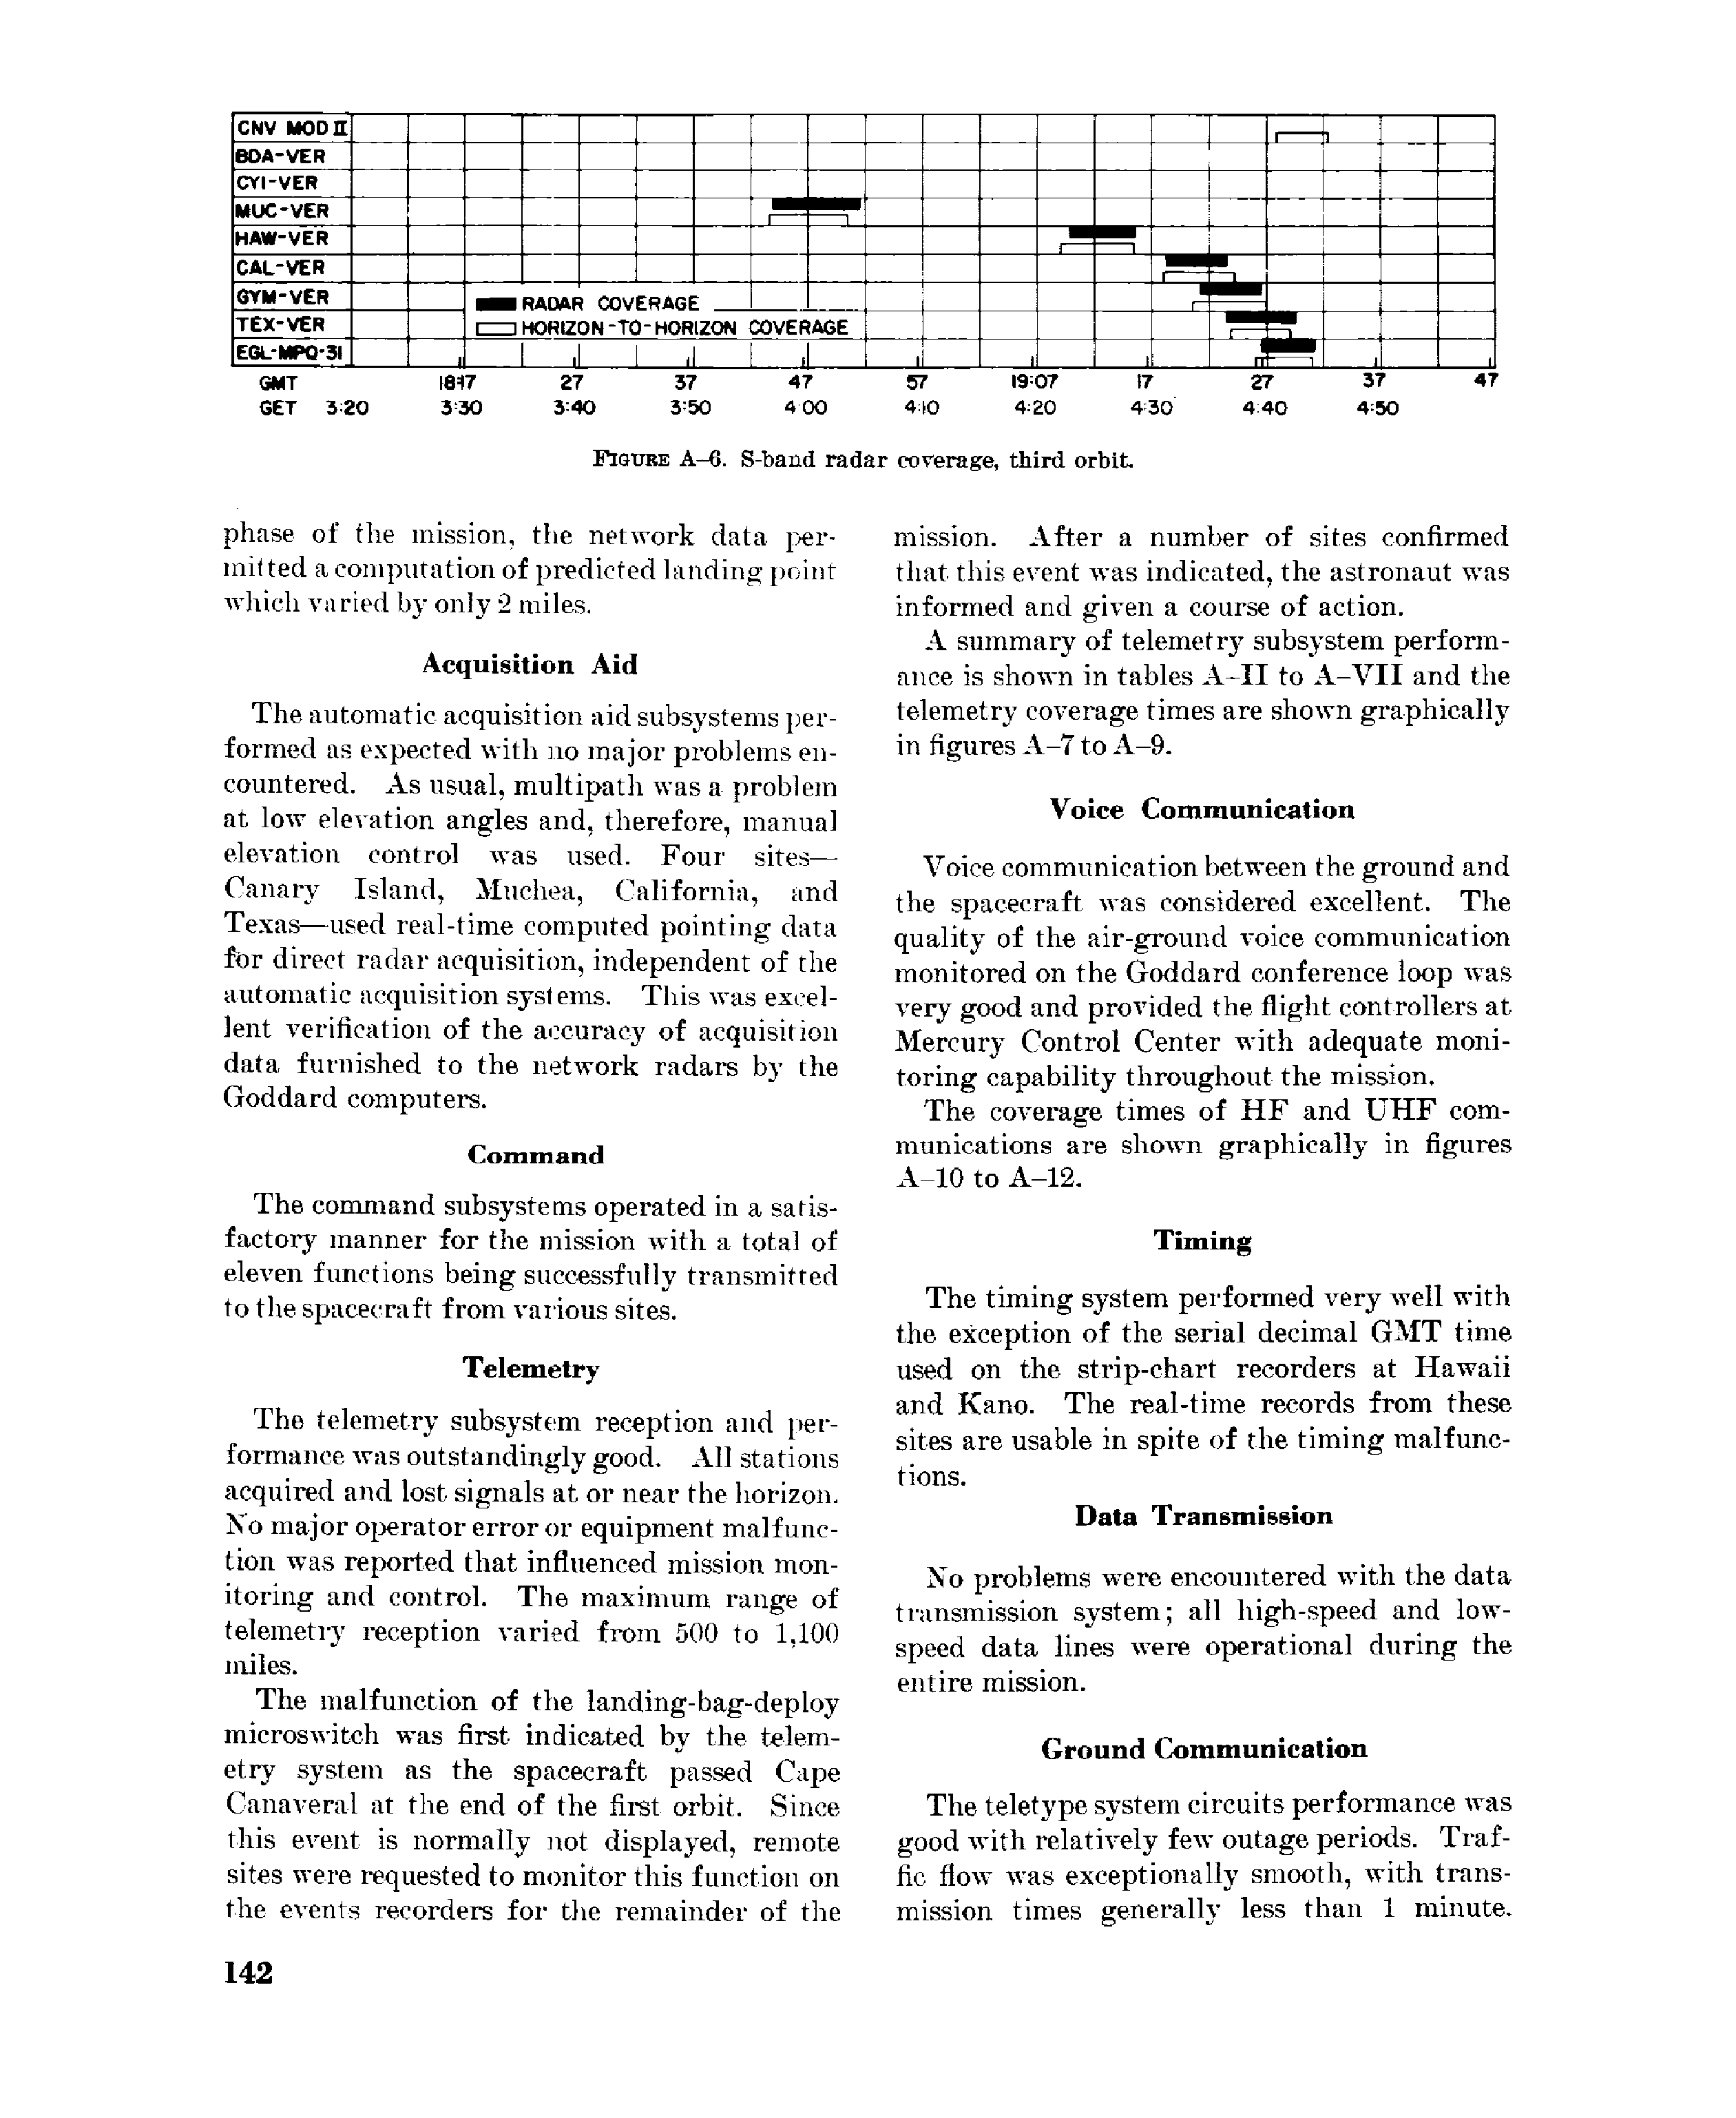 Page 142 of Mercury 6’s original transcript